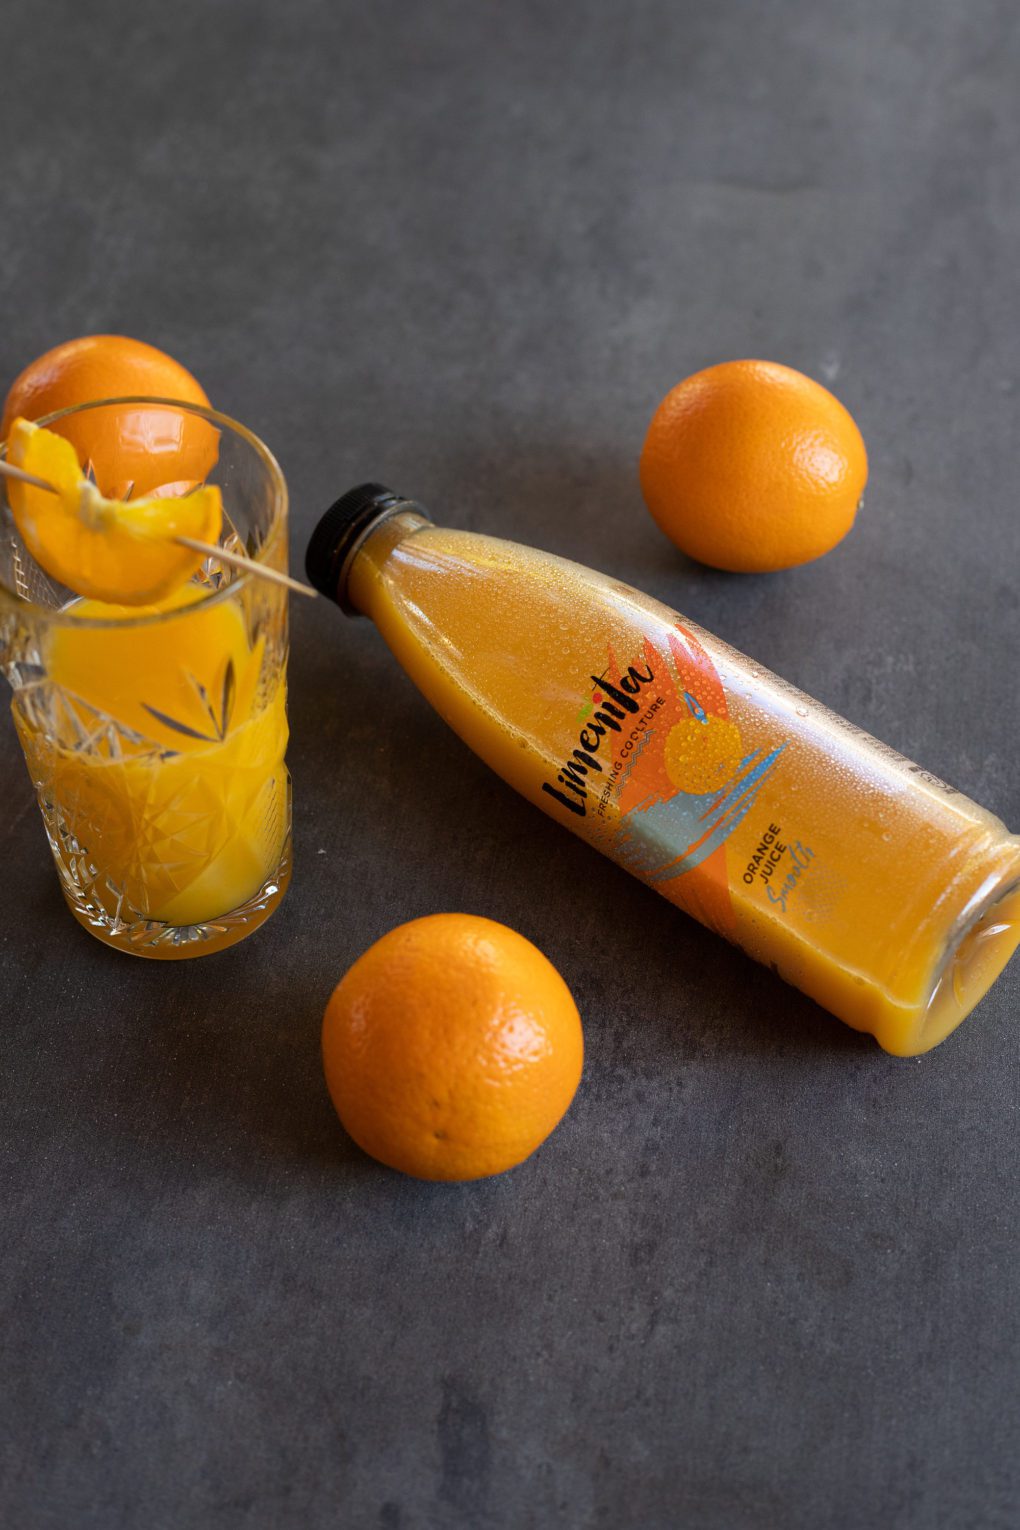 Orange juice smooth
